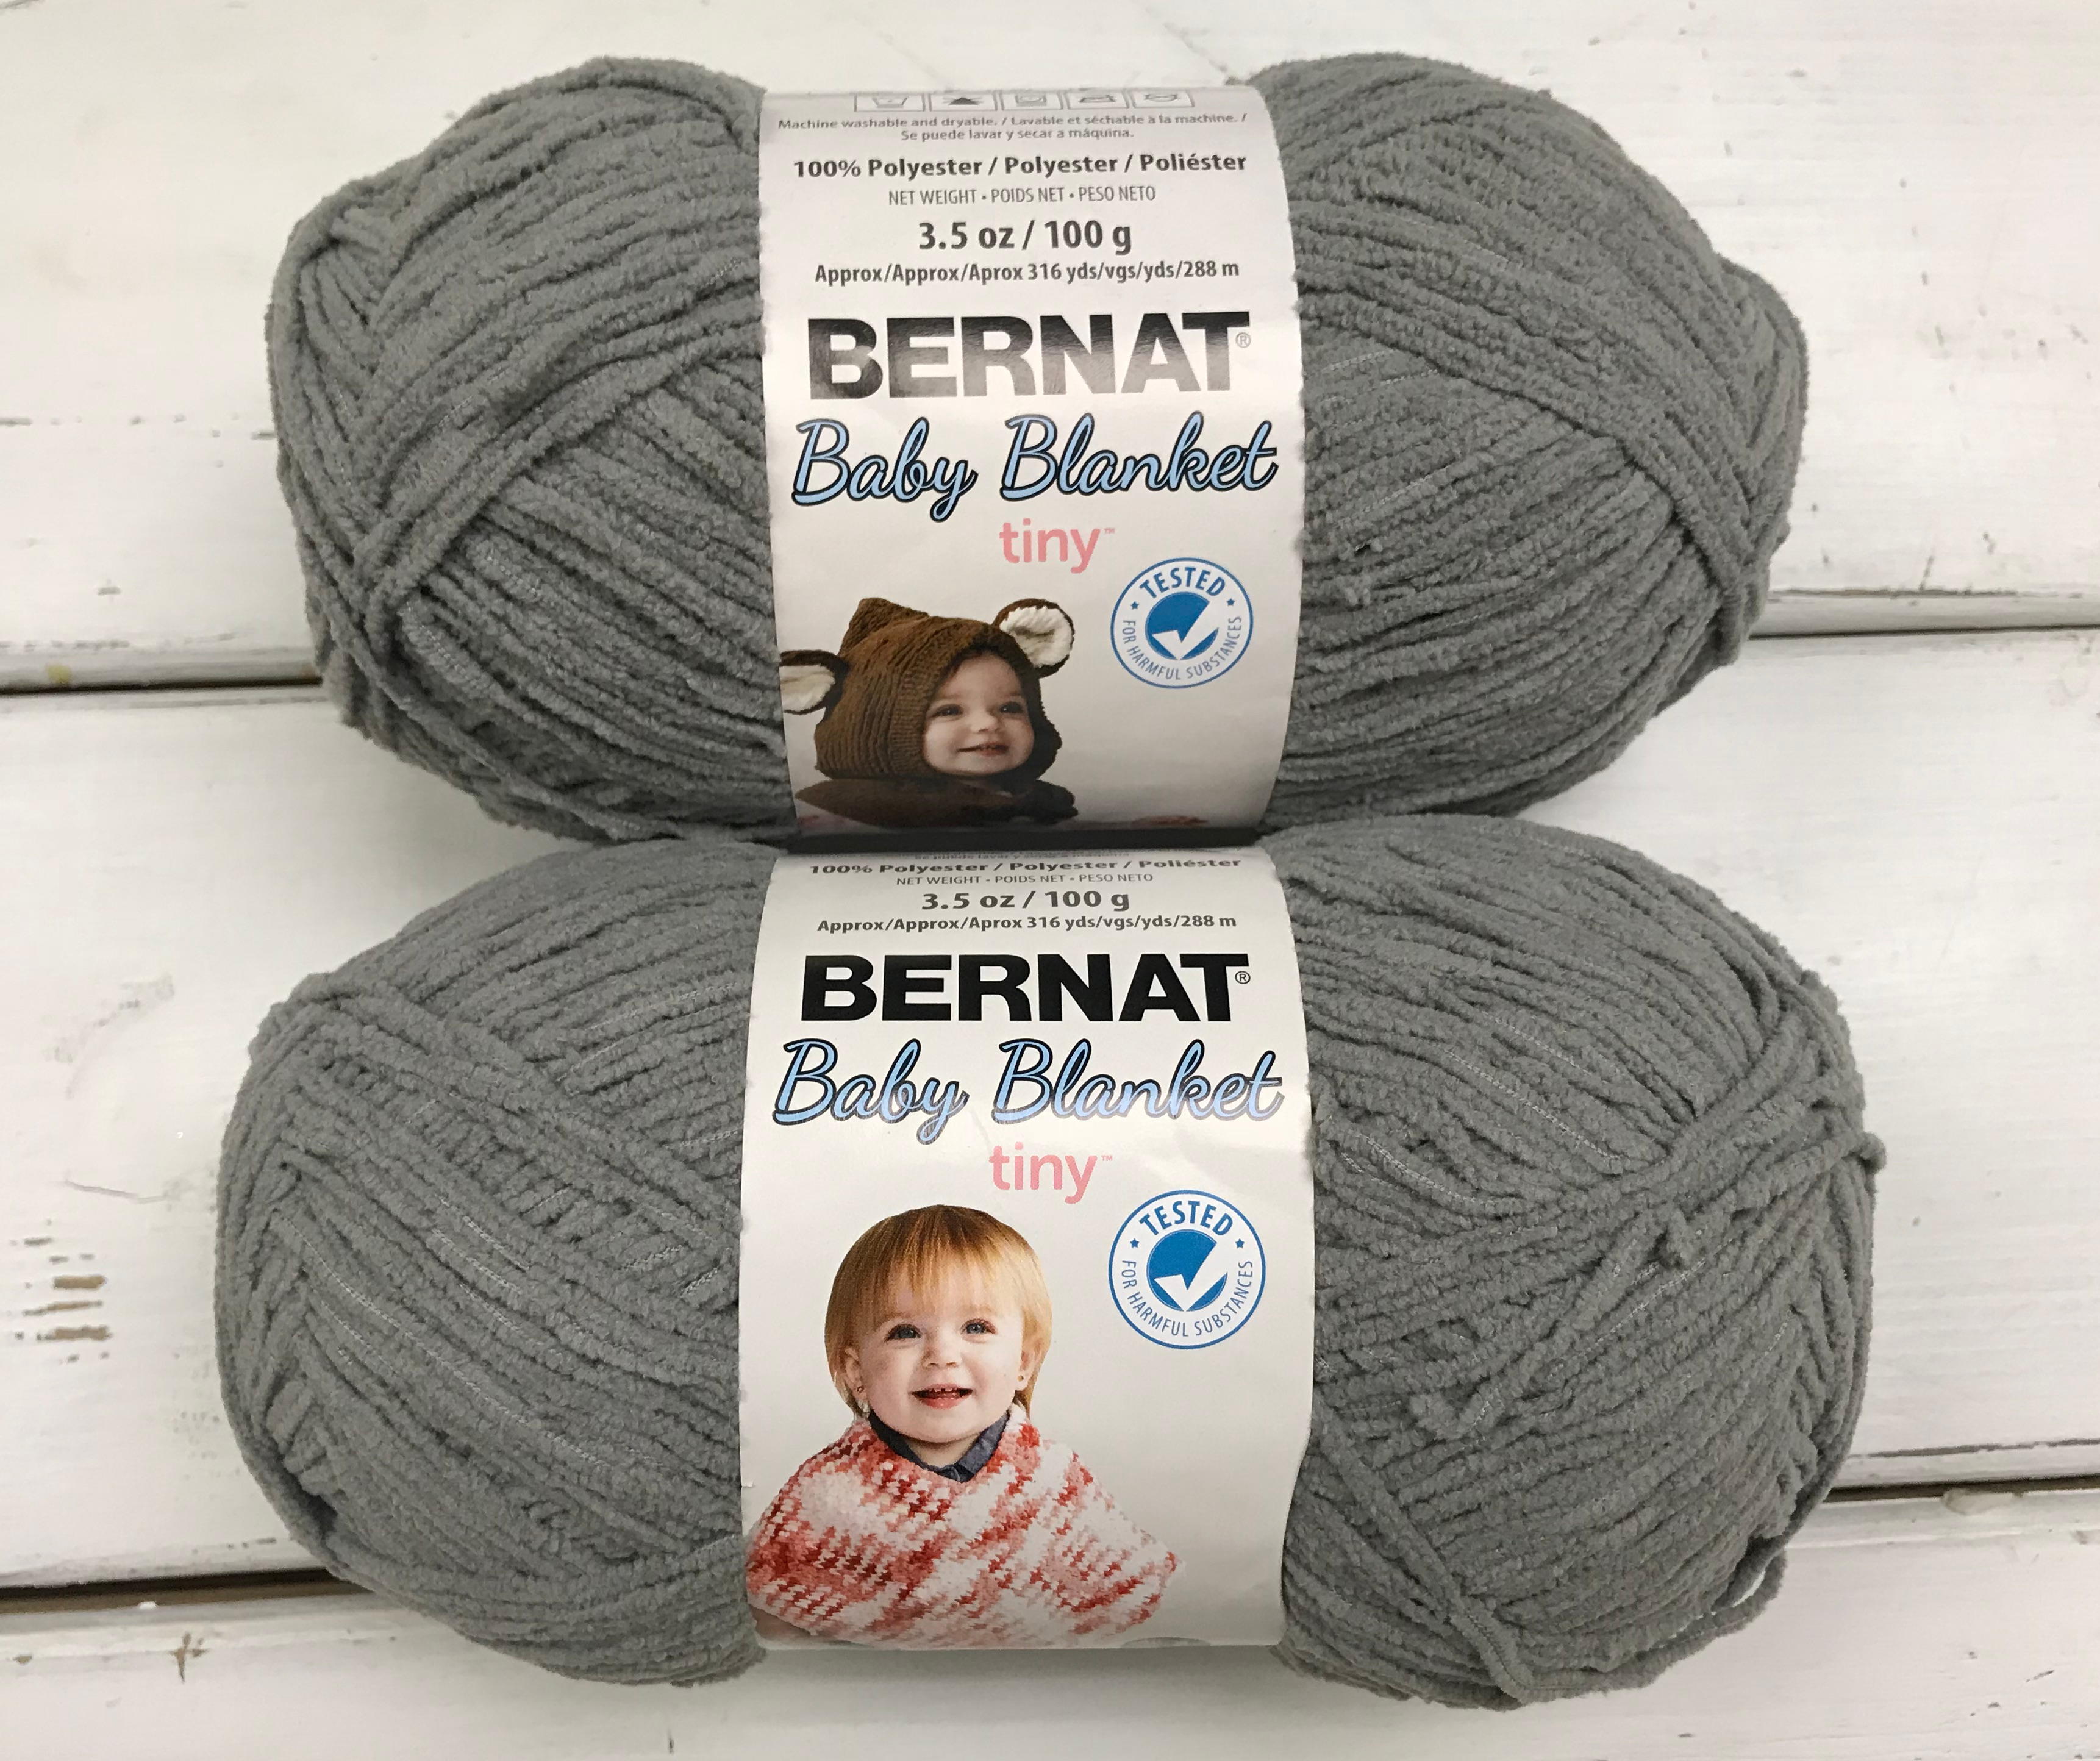 Bernat Baby Blanket - Yarn Review 